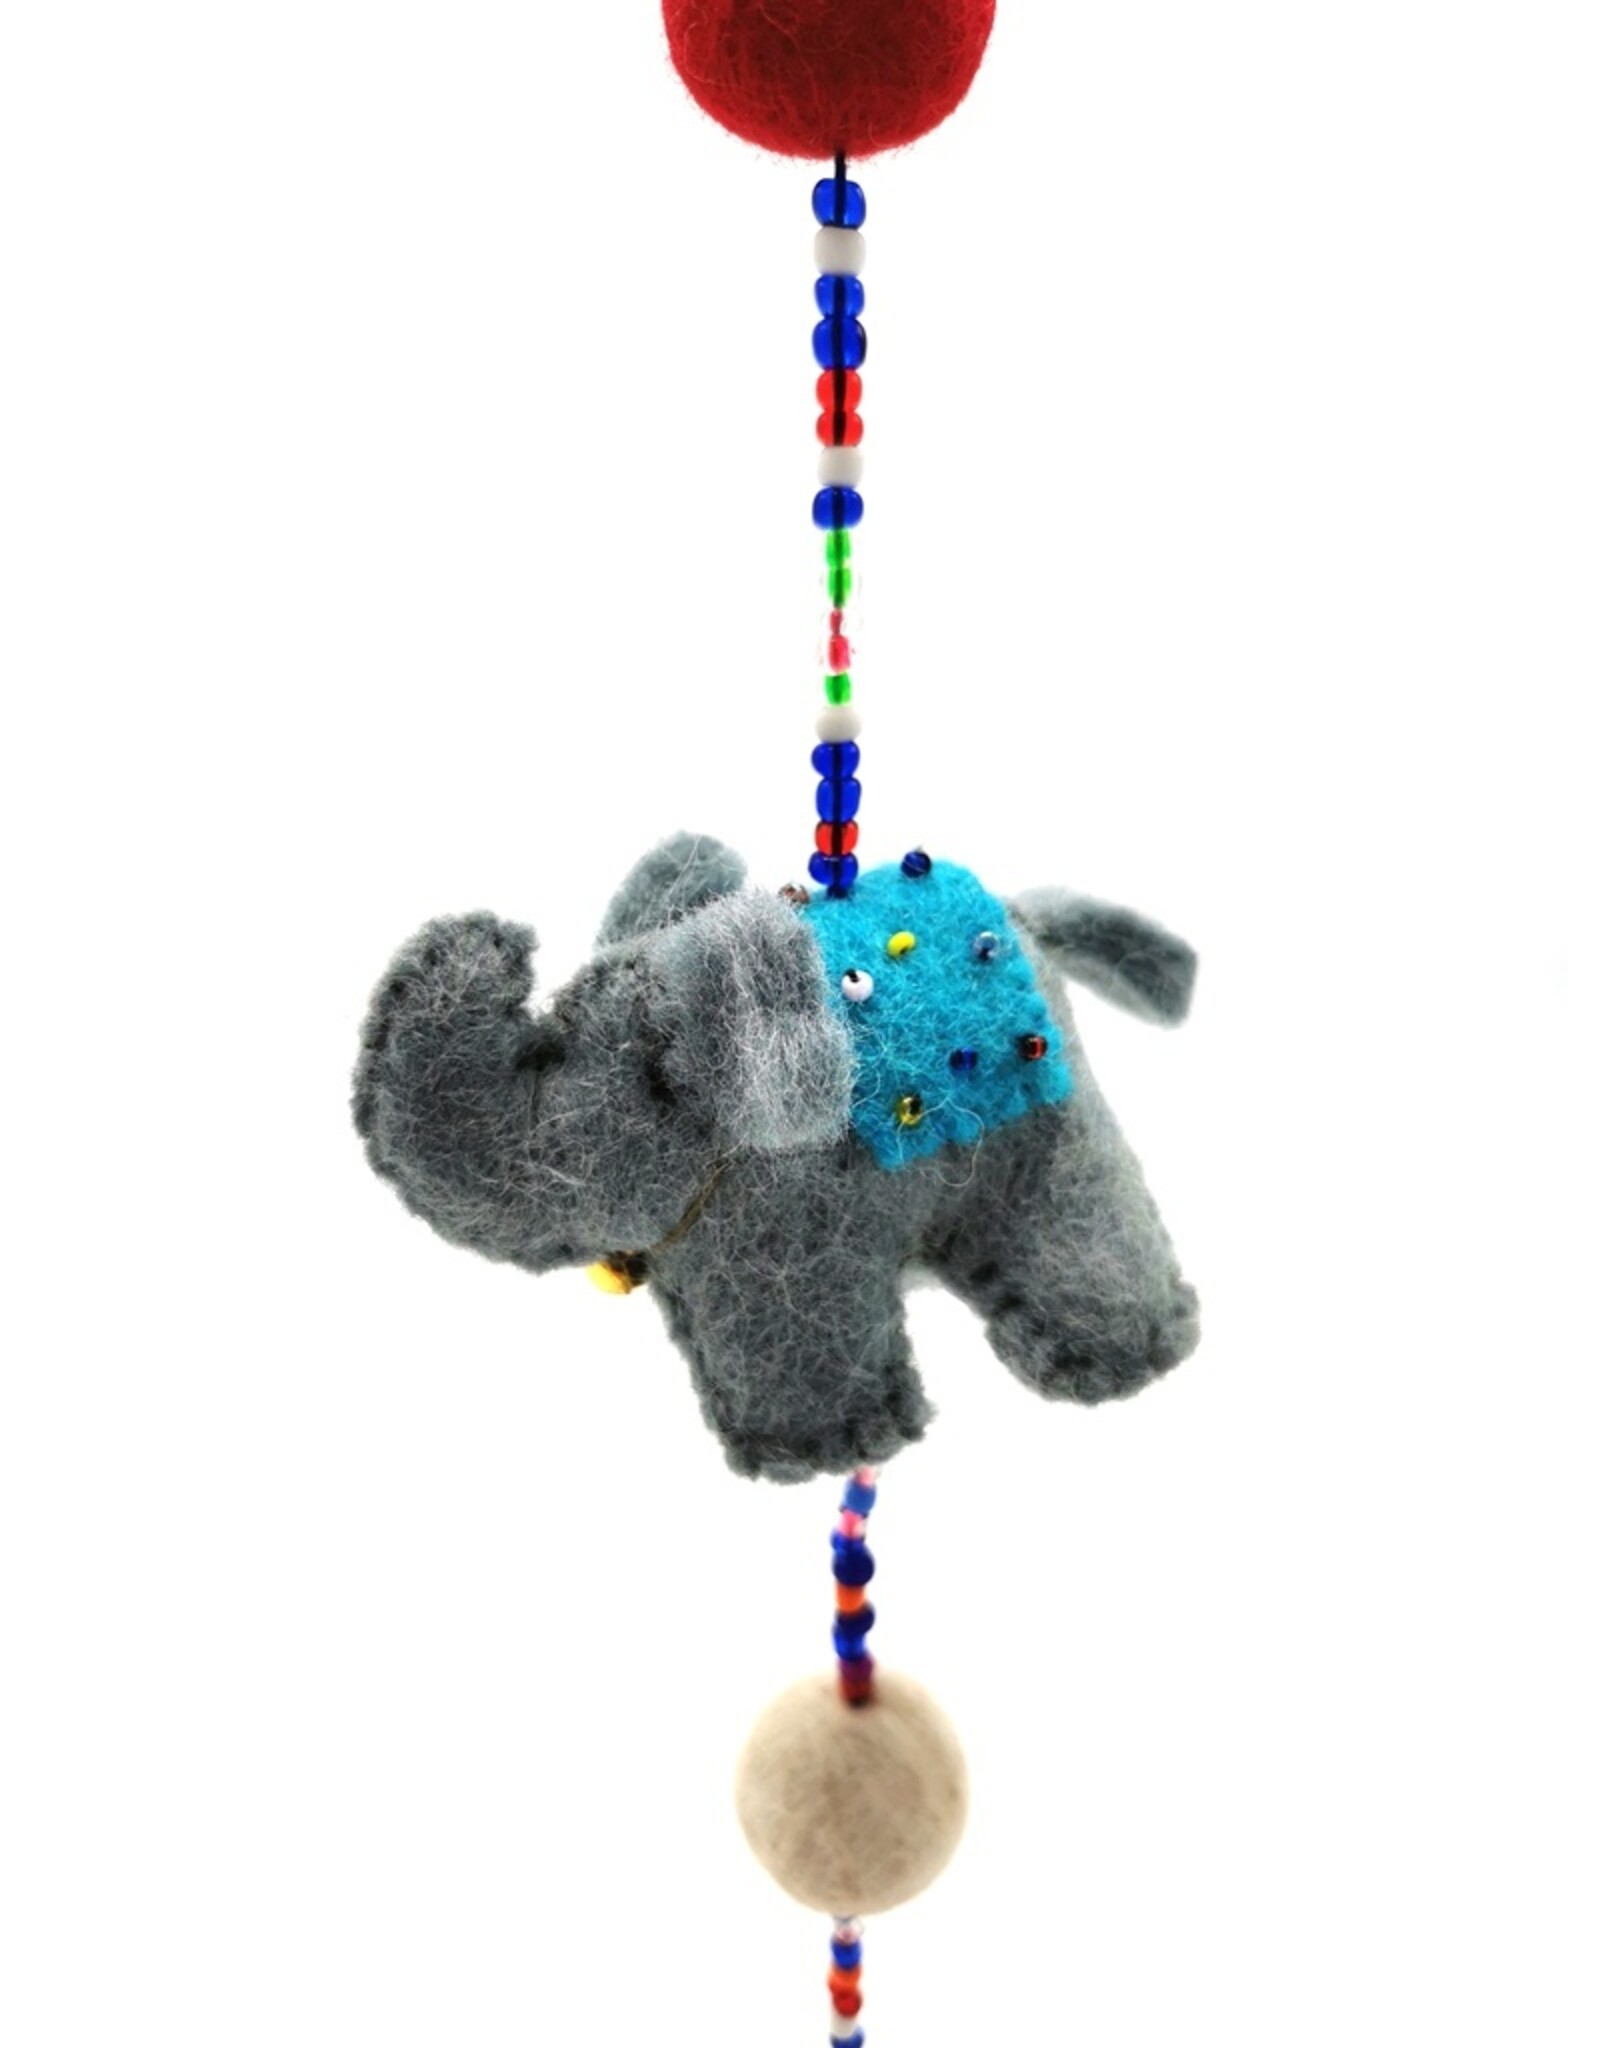 Trukado Miscellaneous - Felt Mobile Elephants handmade, approx. 100cm